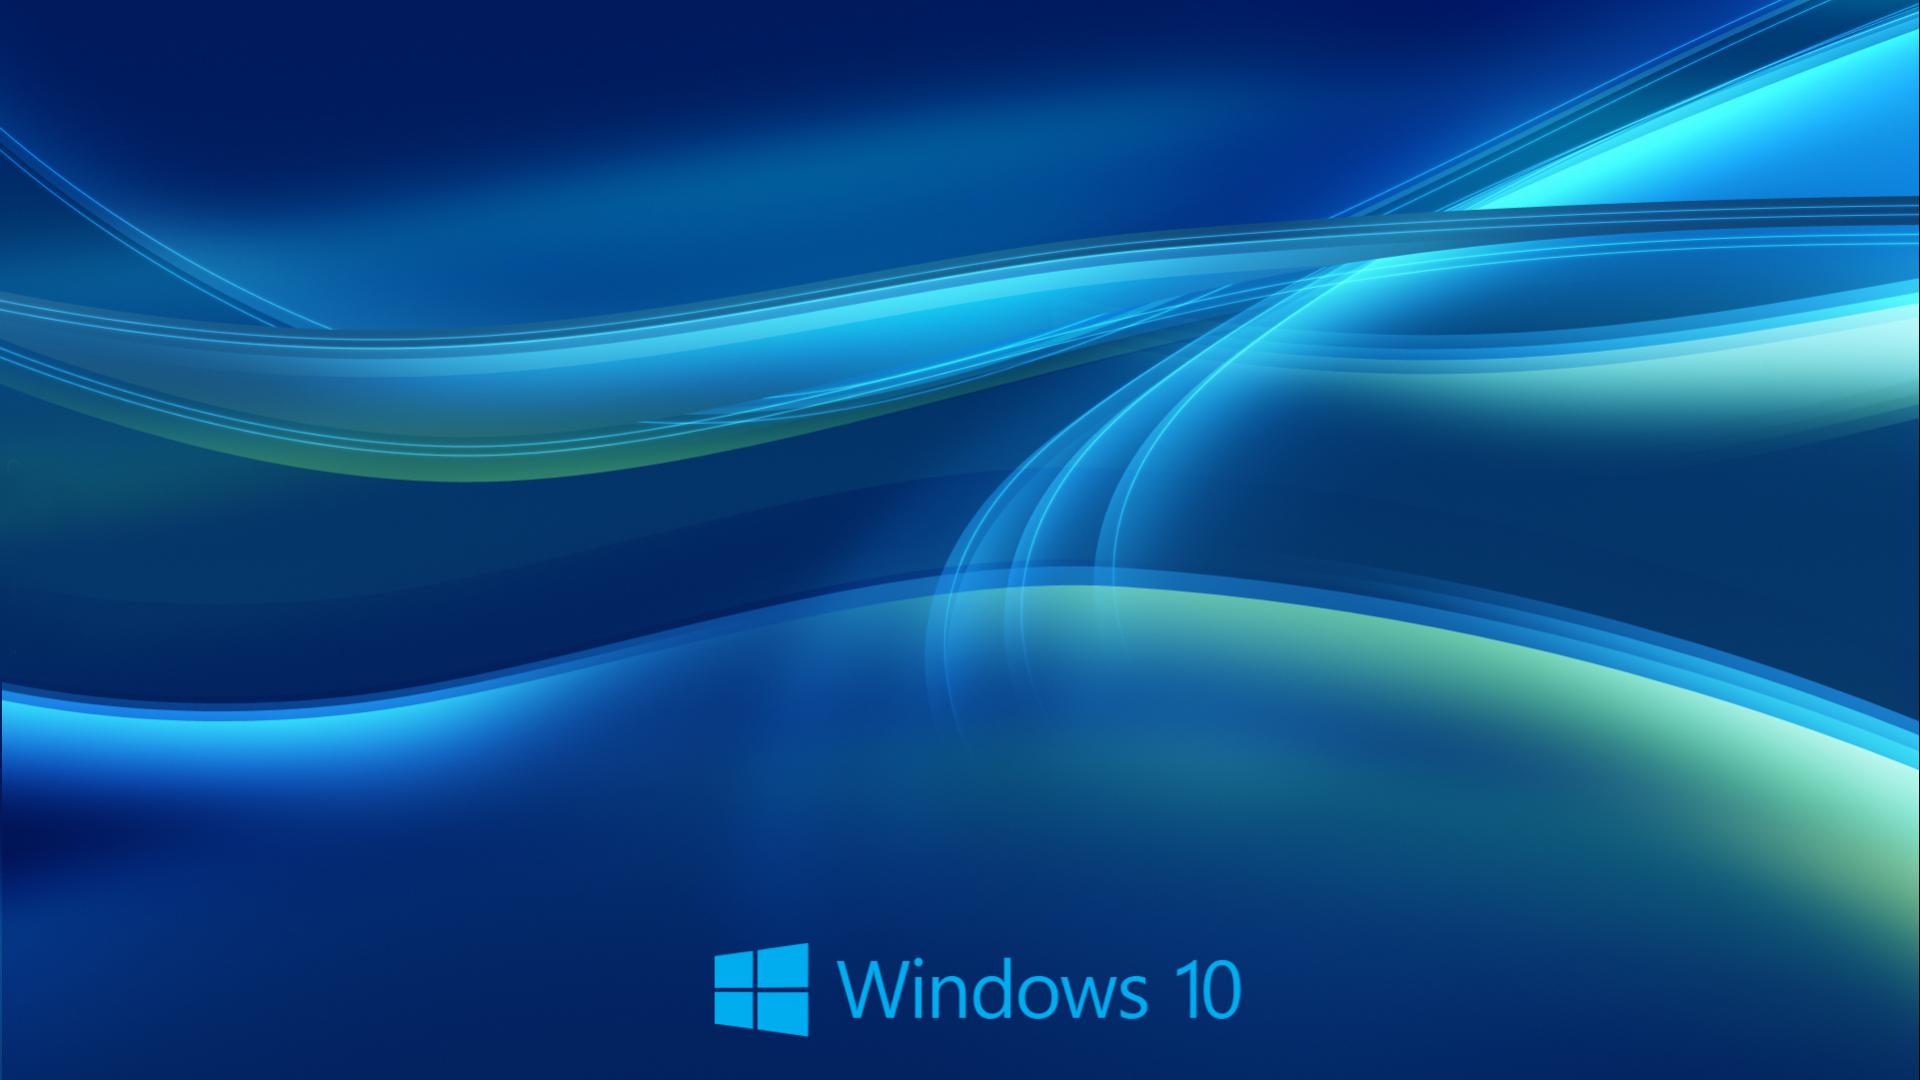 Windows 10 Hd Wallpaper 1920x1080 Wallpapersafari